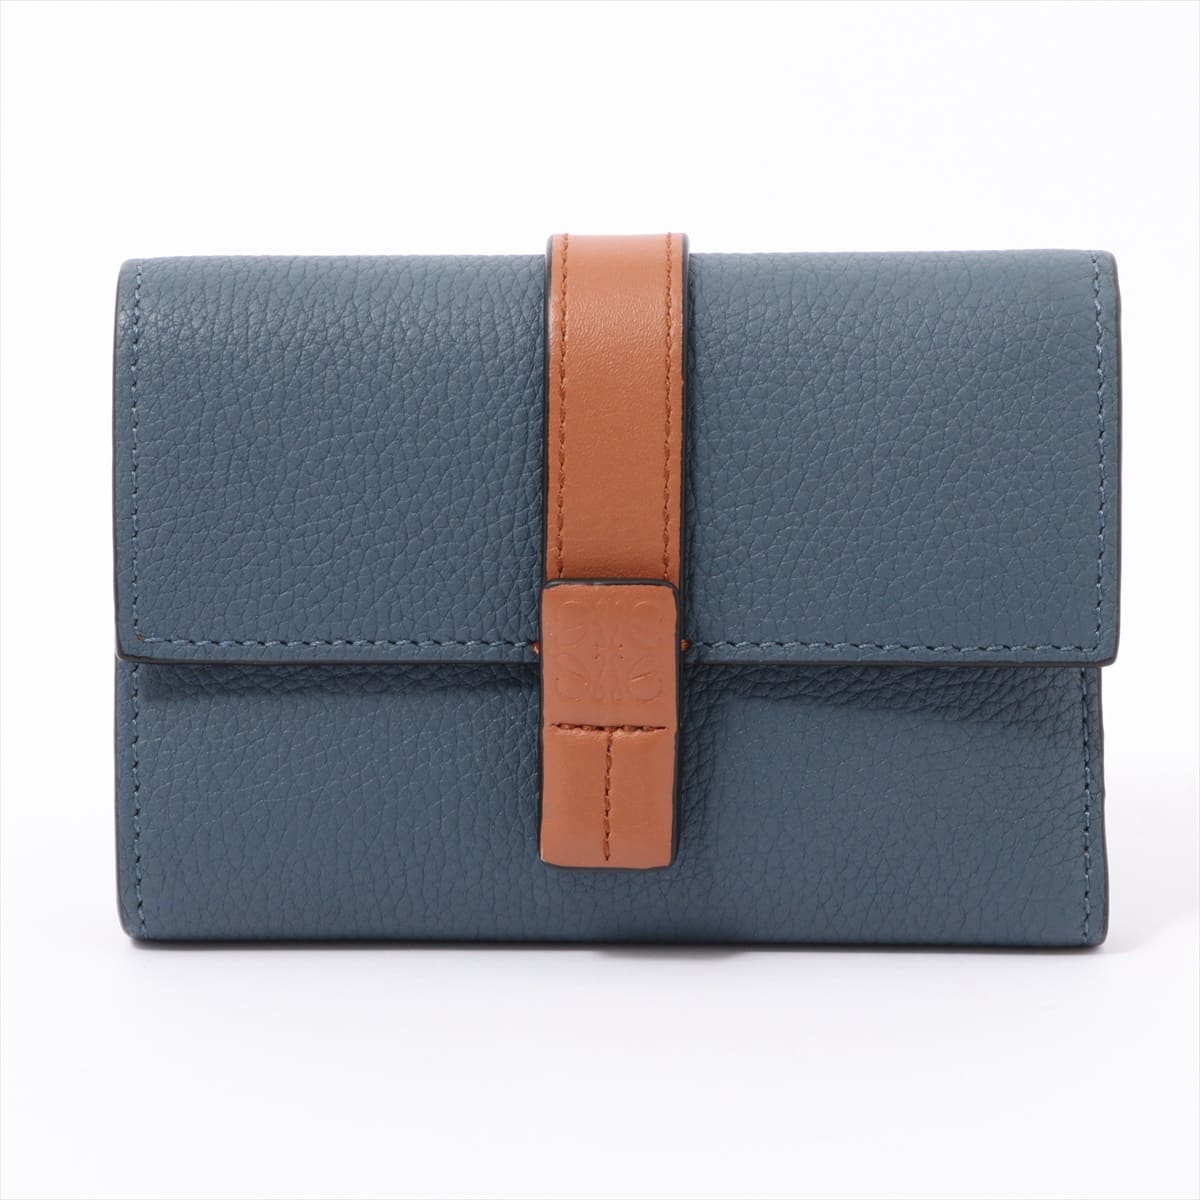 Loewe Small Vertical Wallet Leather Wallet Navy blue